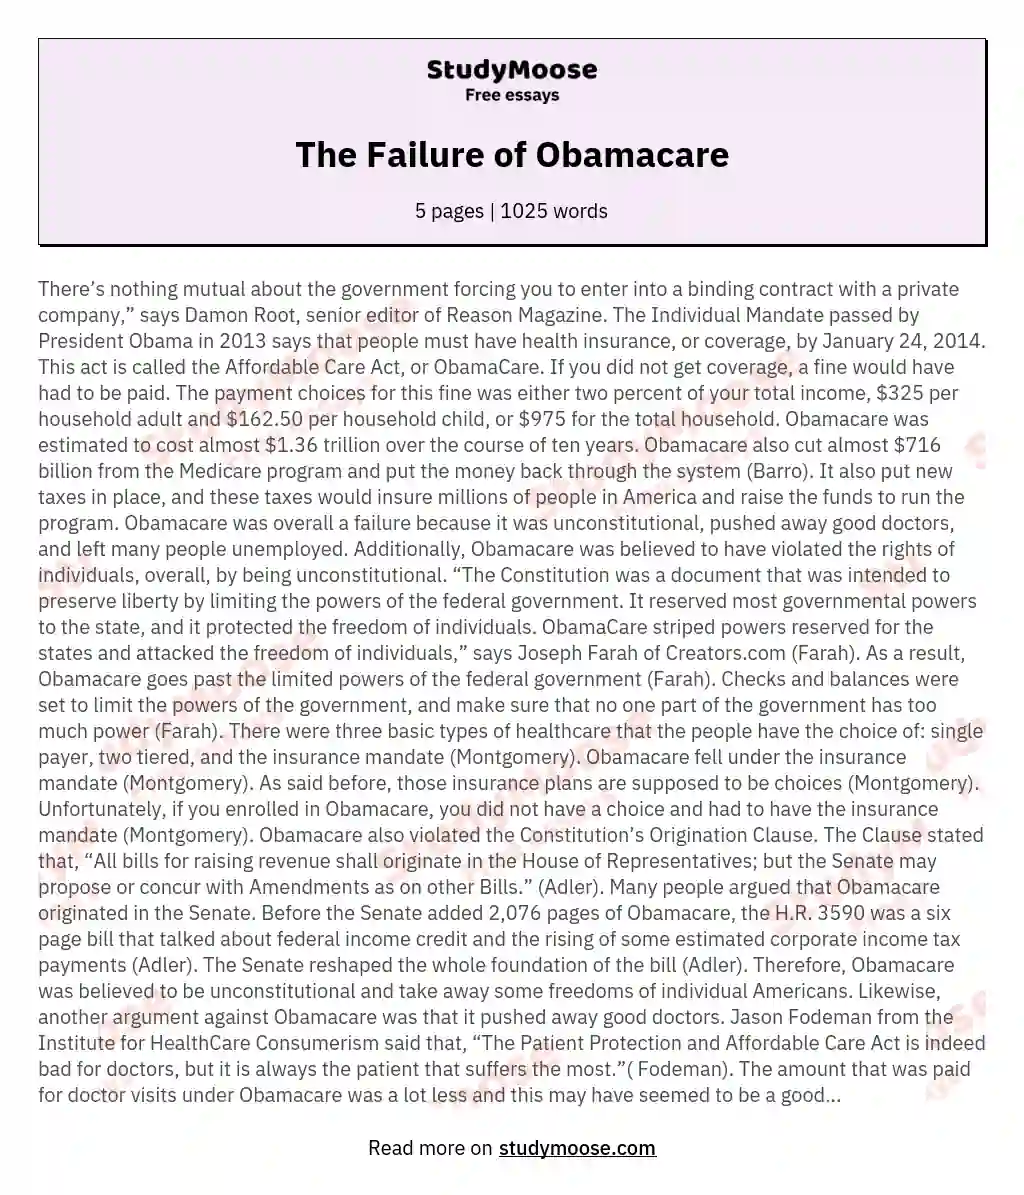 The Failure of Obamacare